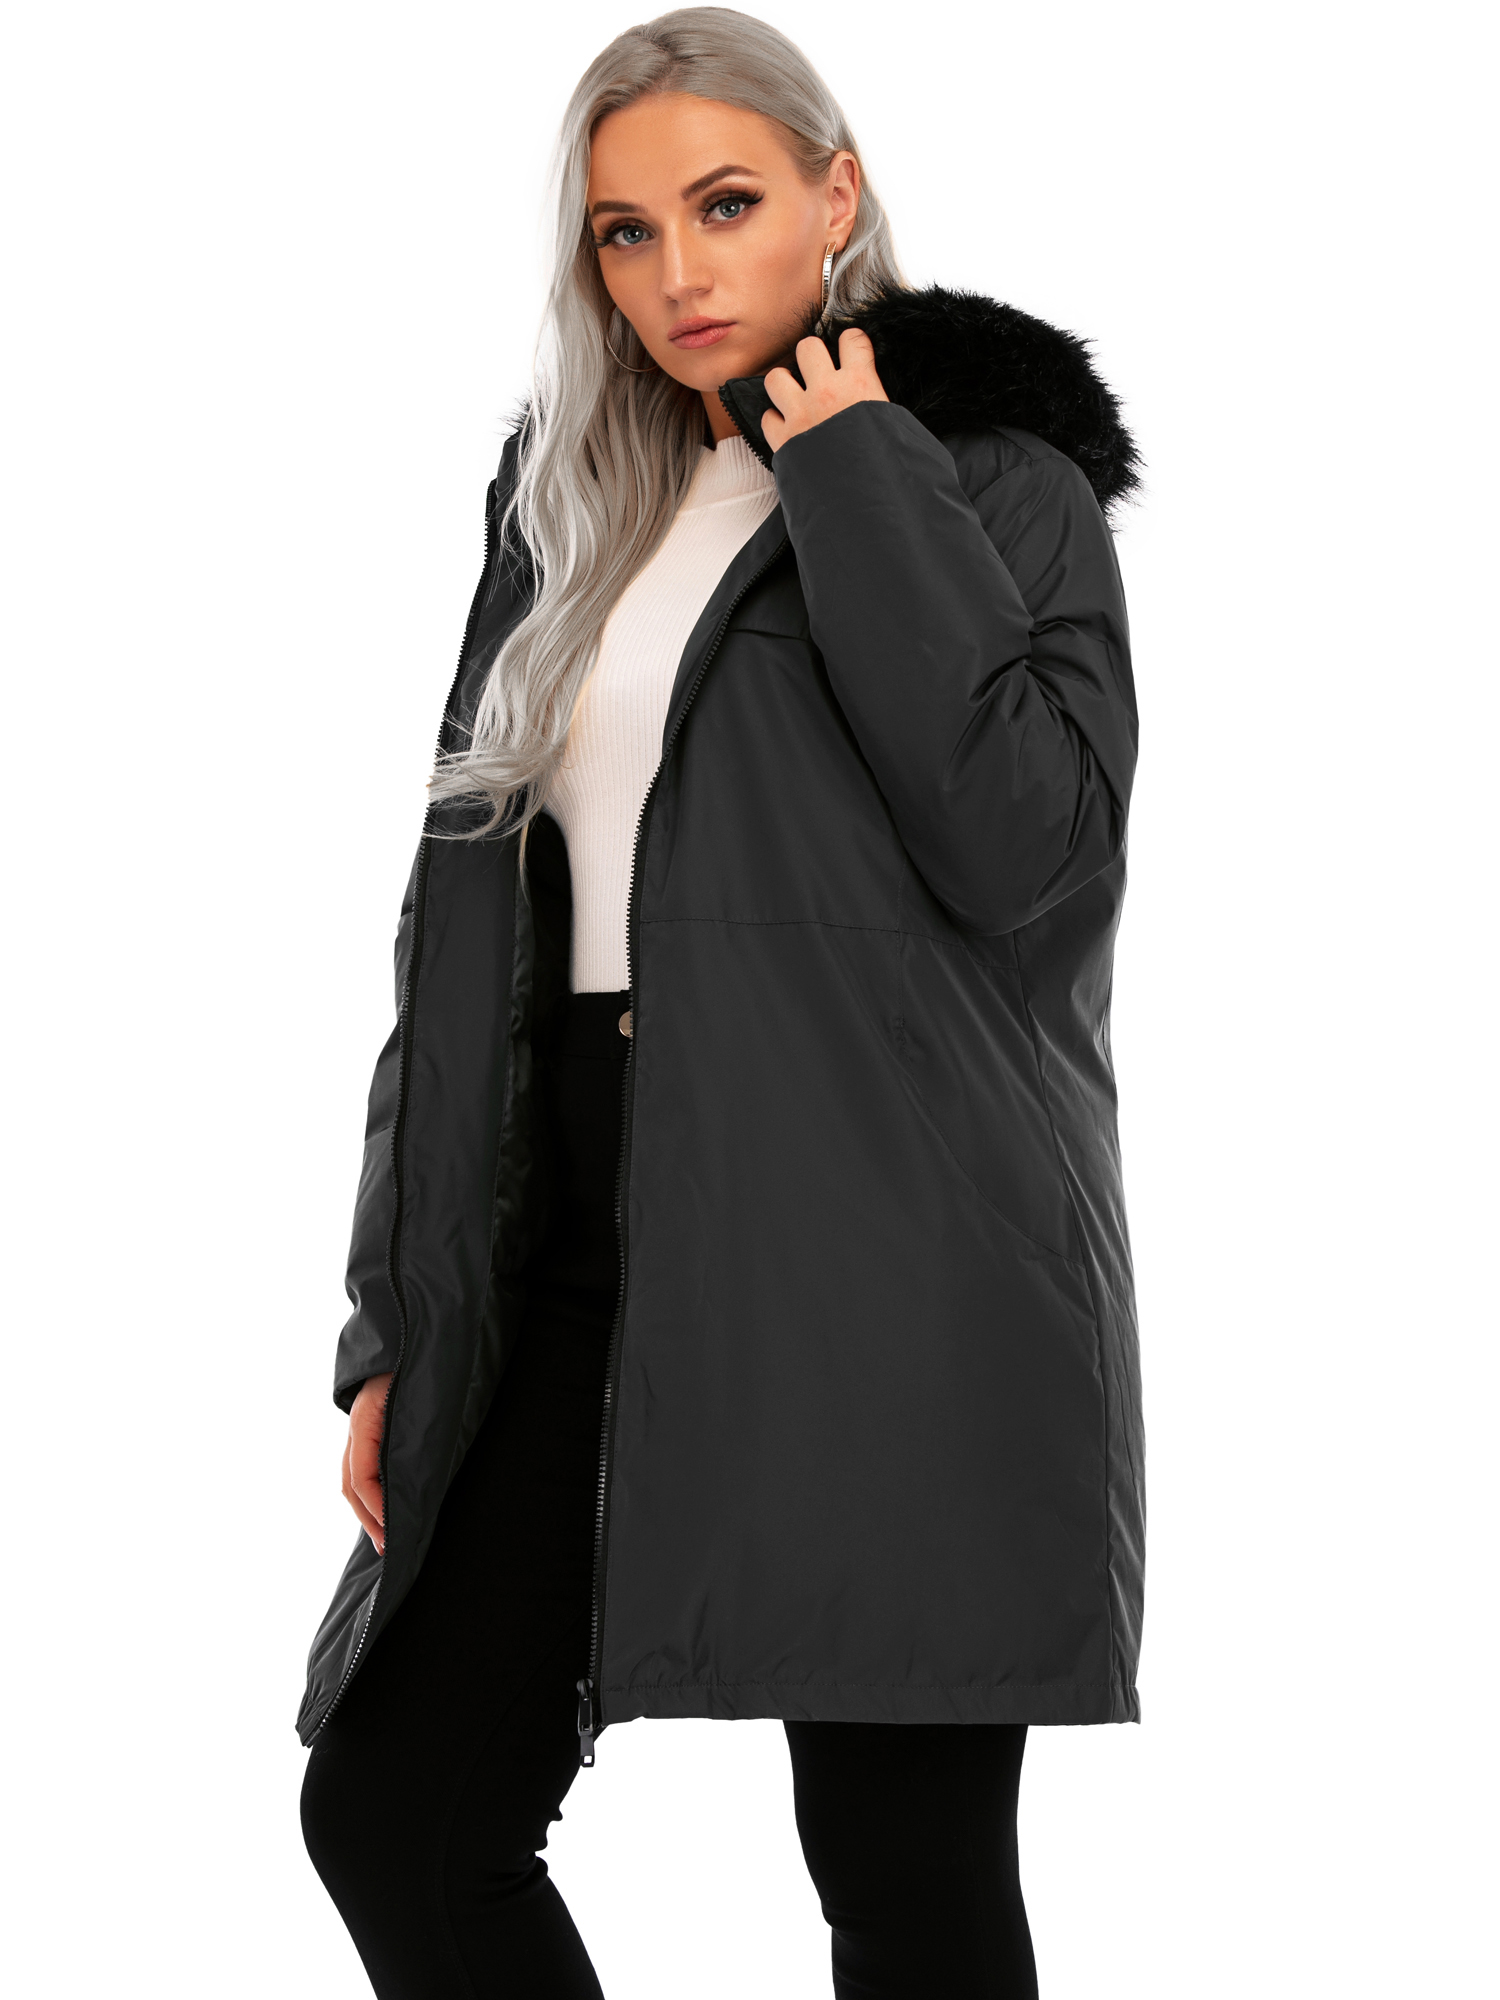 LELINTA Women Plus Size Winter Coats Hooded Warm Puffer Lined Jacket Zip Parka Raincoat Active Outdoor Trench Long Coats - image 4 of 7